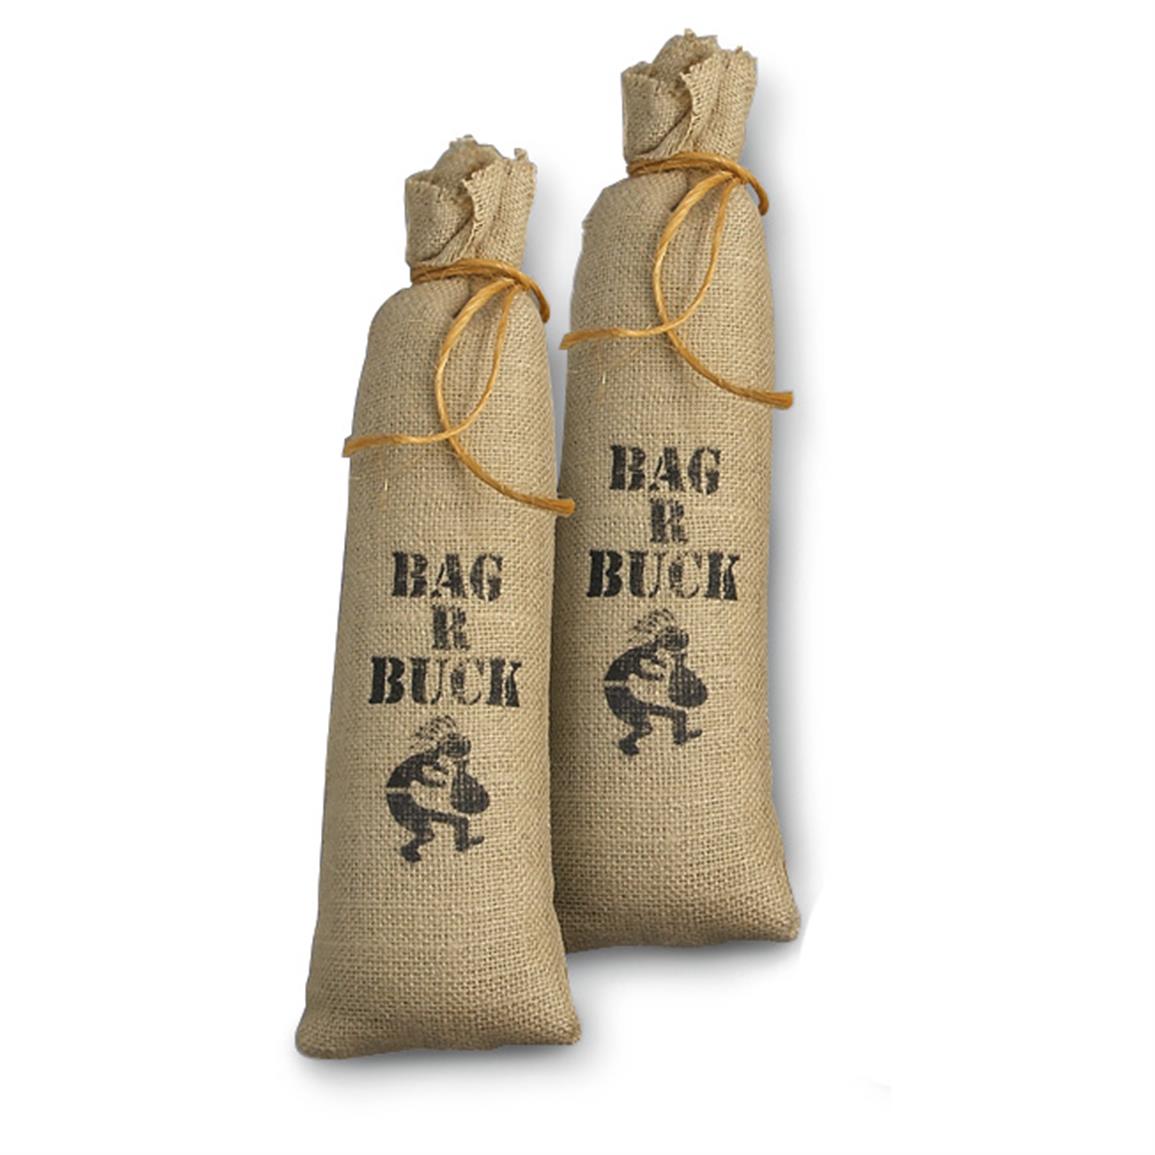 Bag-R-Buck Special-Blend Deer Attractant, 2 Pack, 4-lb. Bags